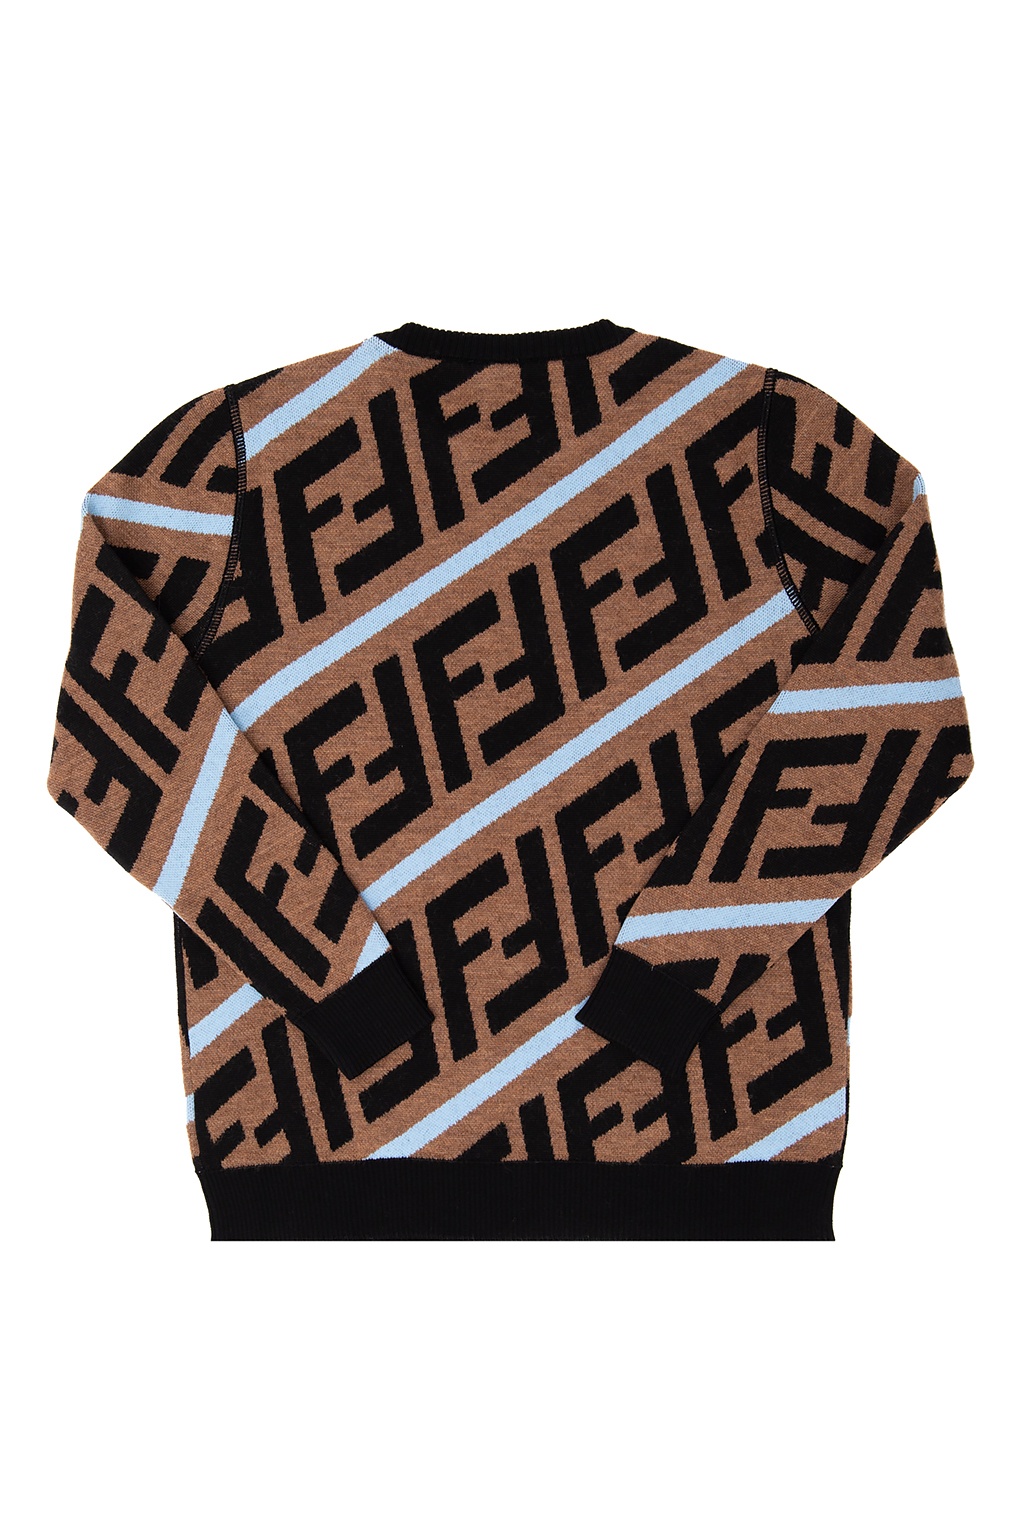 Fendi Kids Patterned sweater